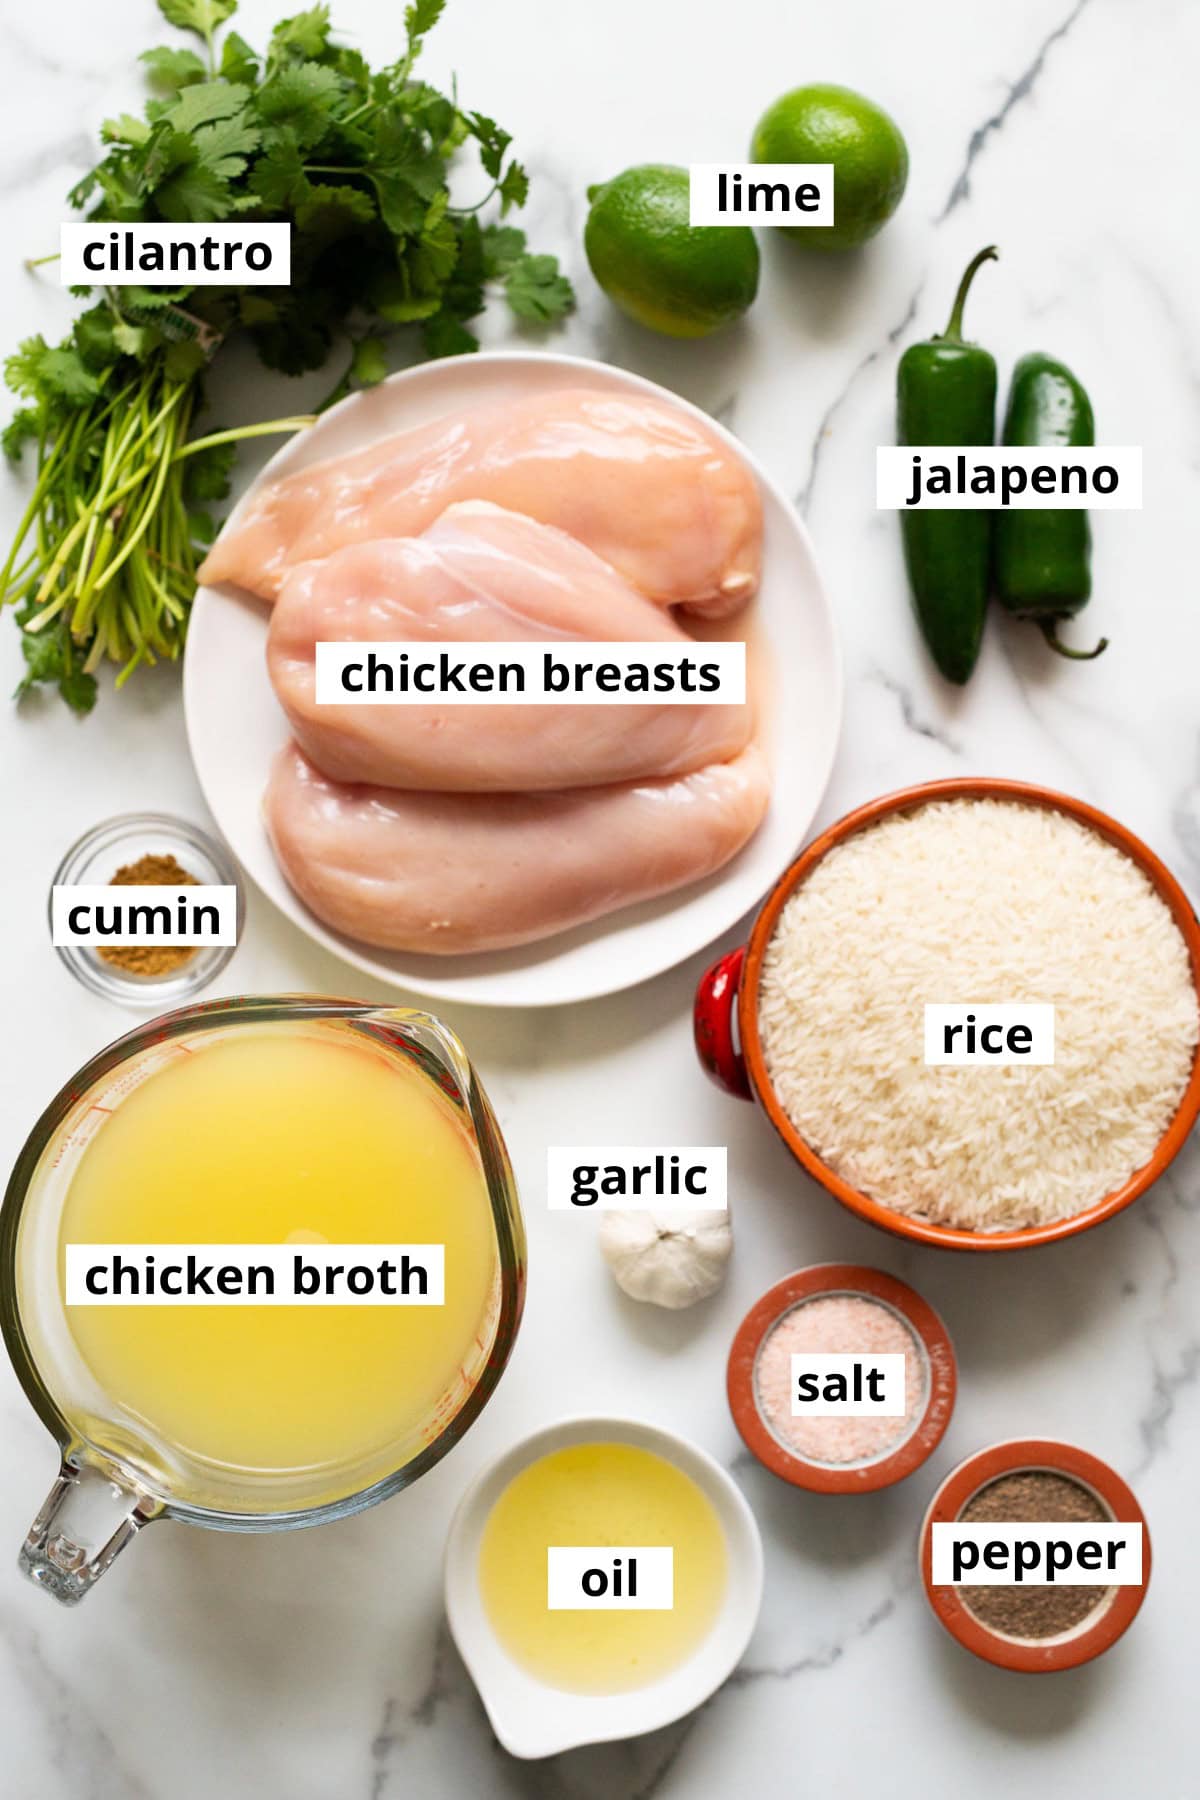 Chicken breasts, rice, garlic, lime, jalapeno, cilantro, cumin, chicken broth, oil, salt and pepper.